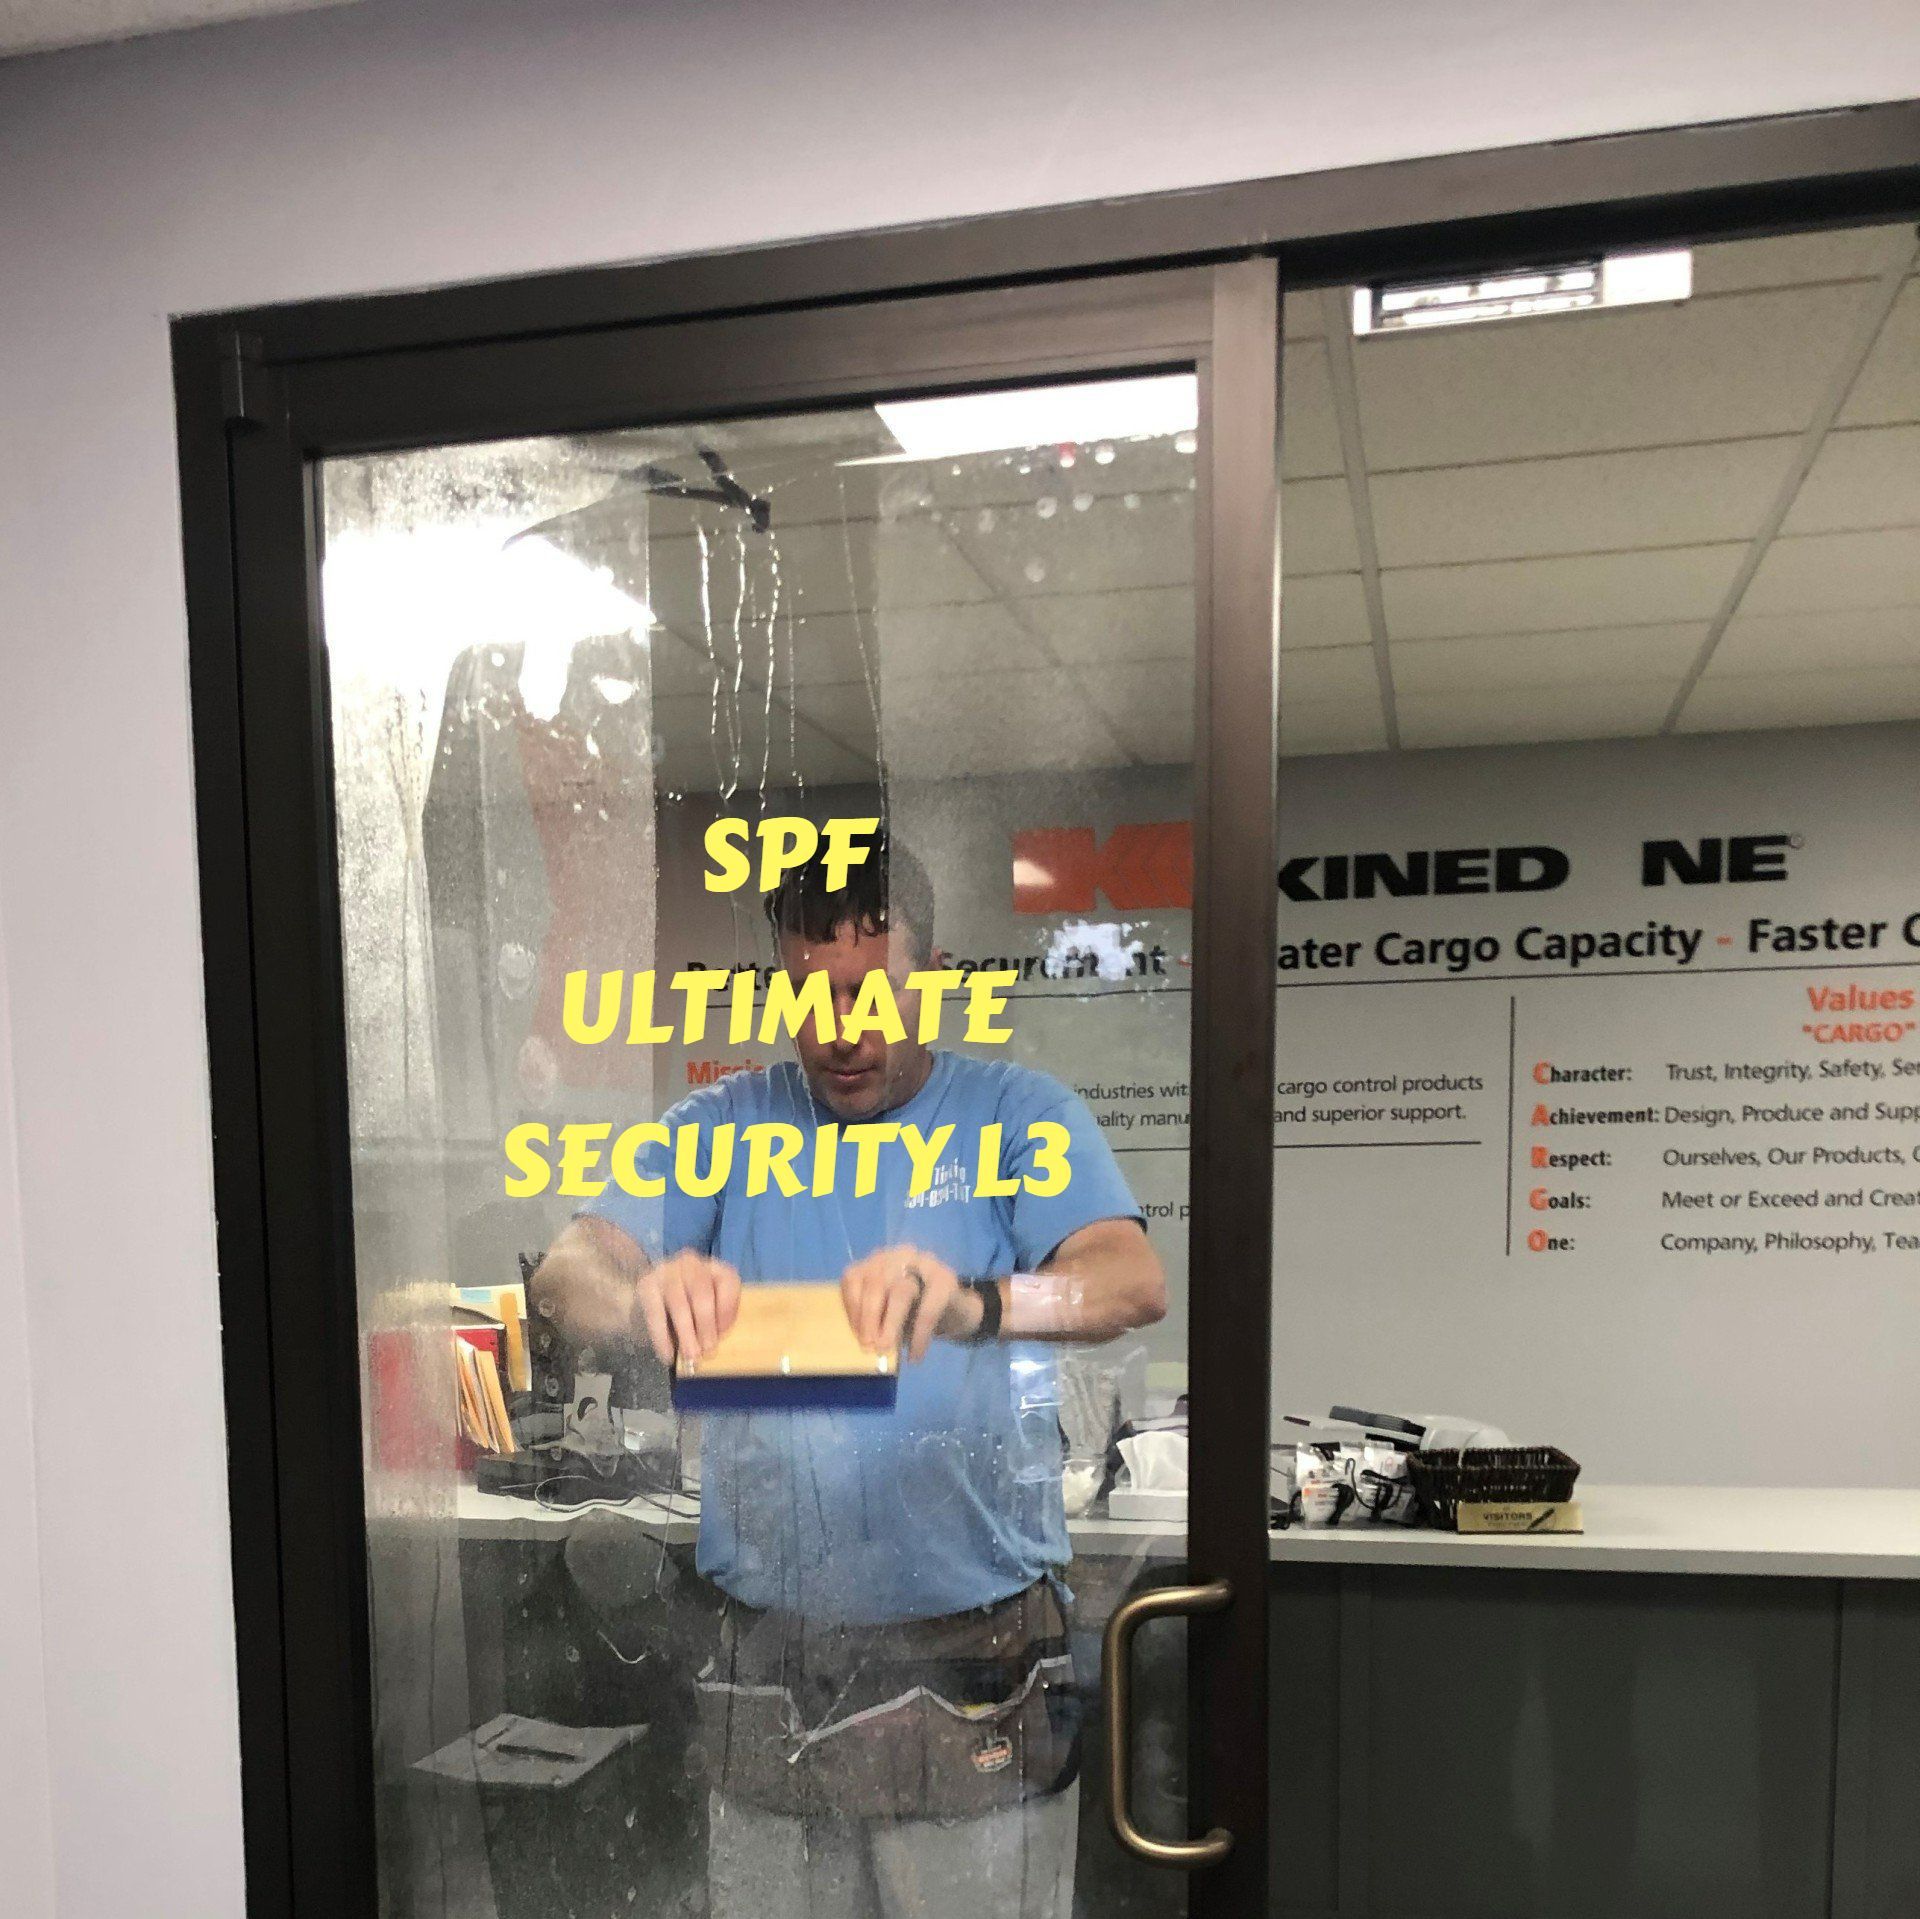 spf armored window security film installed preventing a break-in entry in Prattville AL